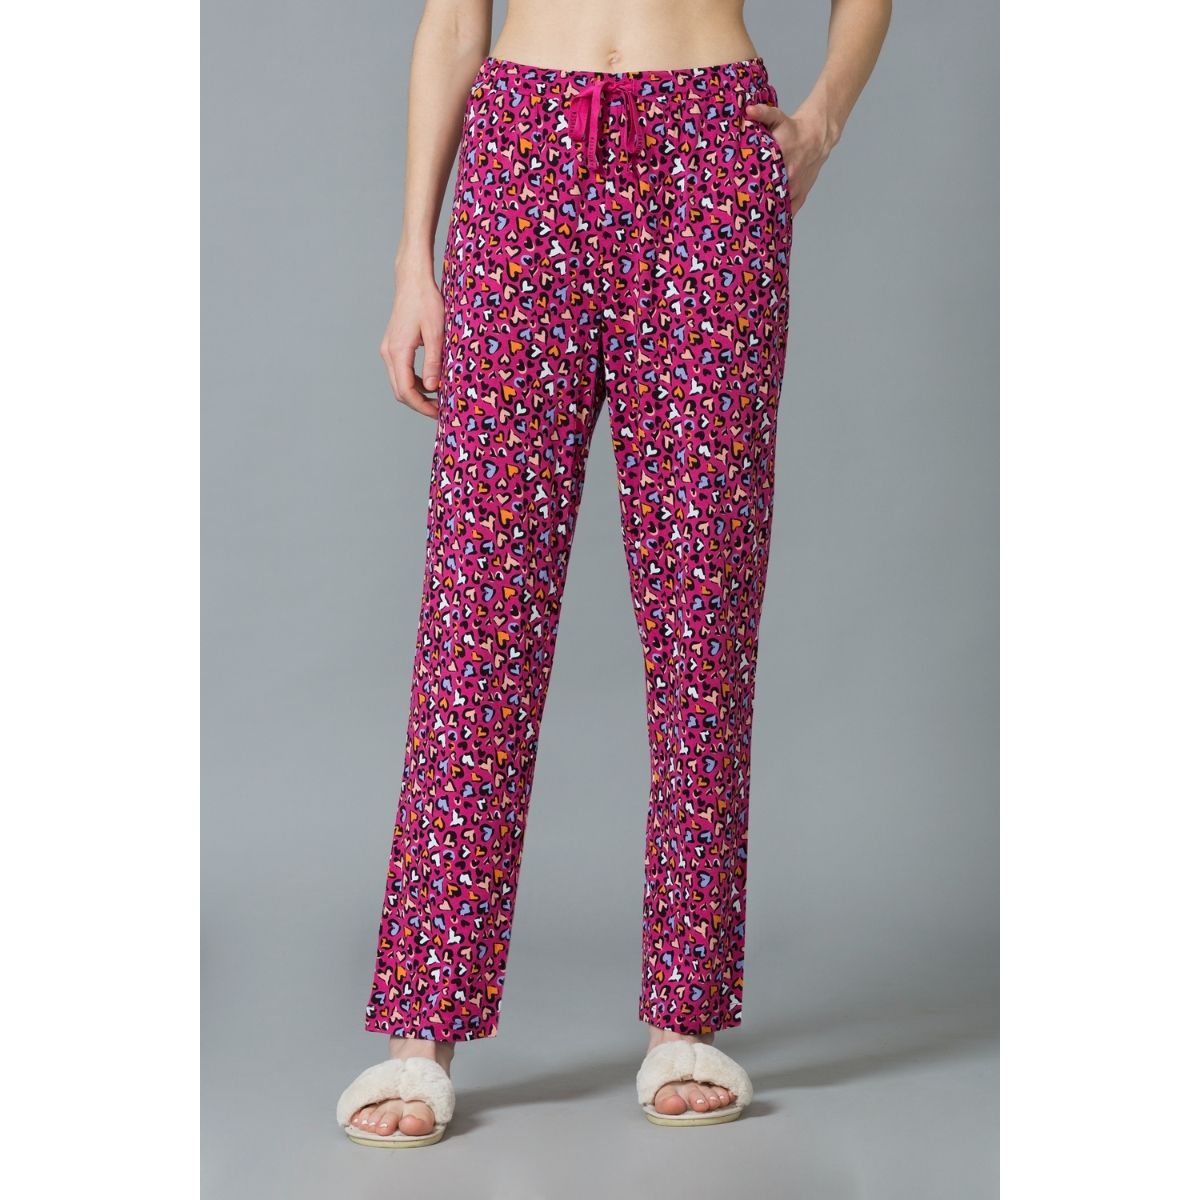 Buy Mendeez Pajama for Men - Cotton Pajama Pants Pack - Online in Pakistan